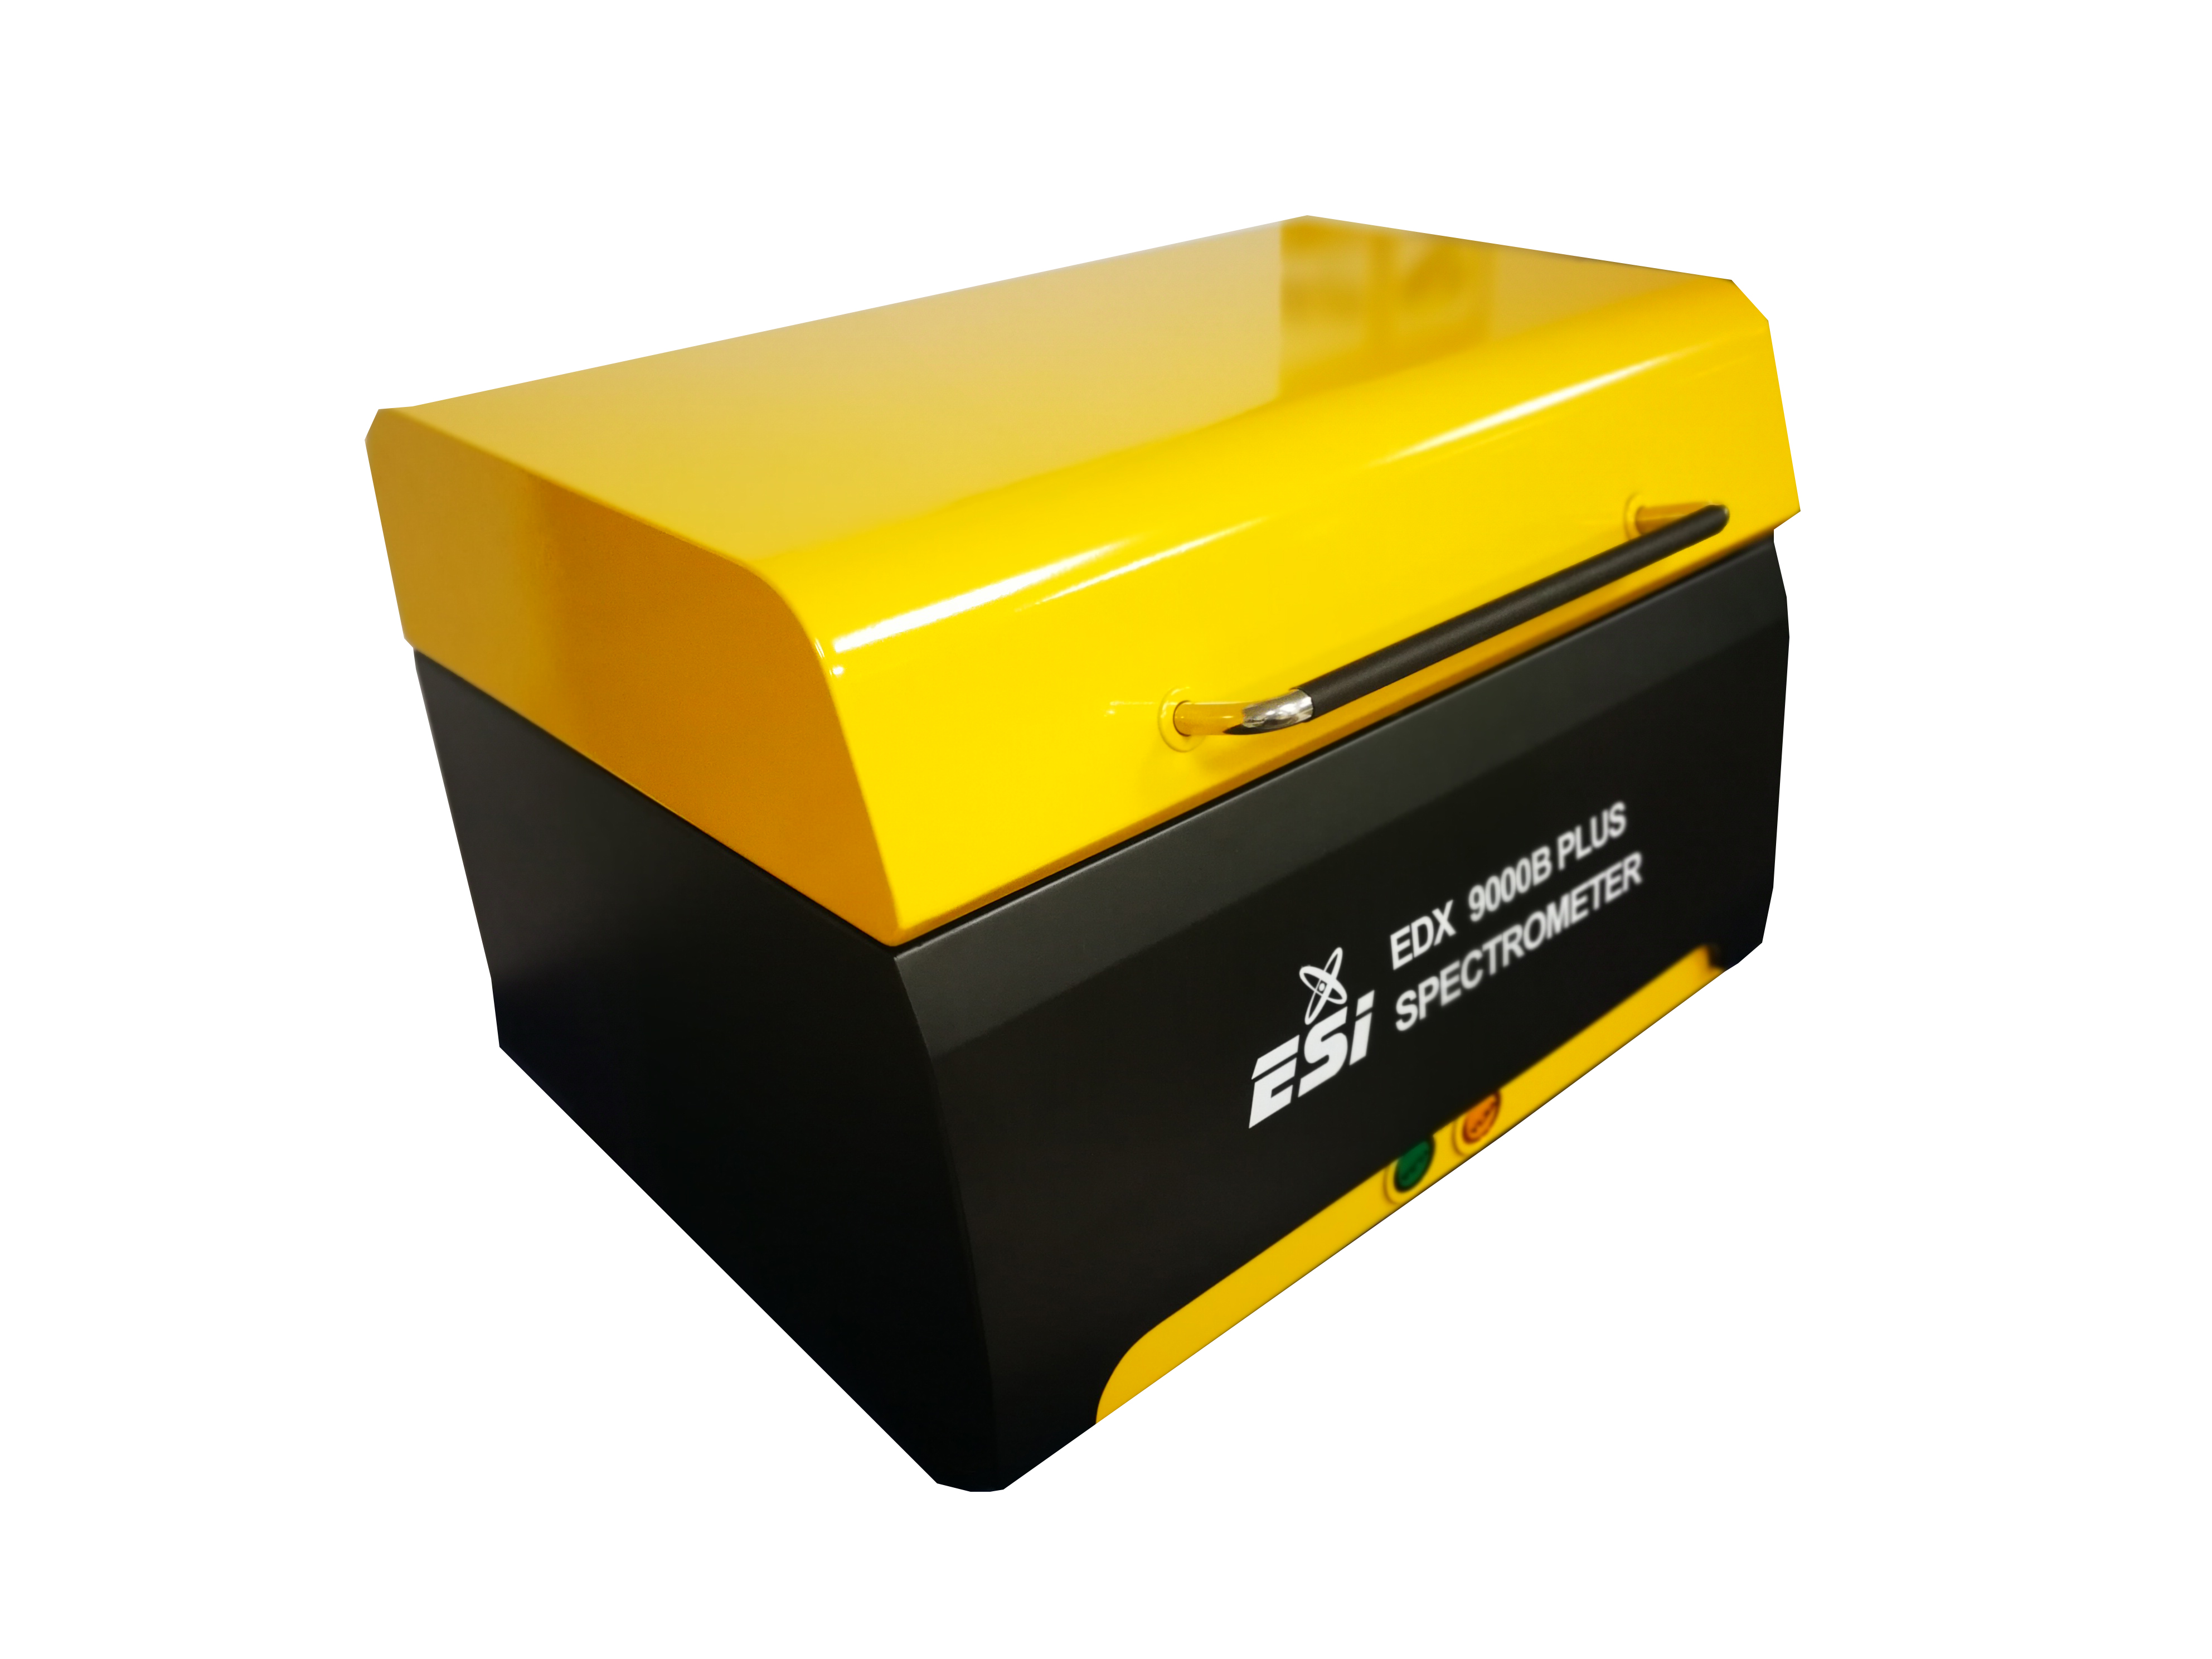 EDX-9000B PLUS 能量色散X荧光光谱仪 矿产矿石专用分析仪